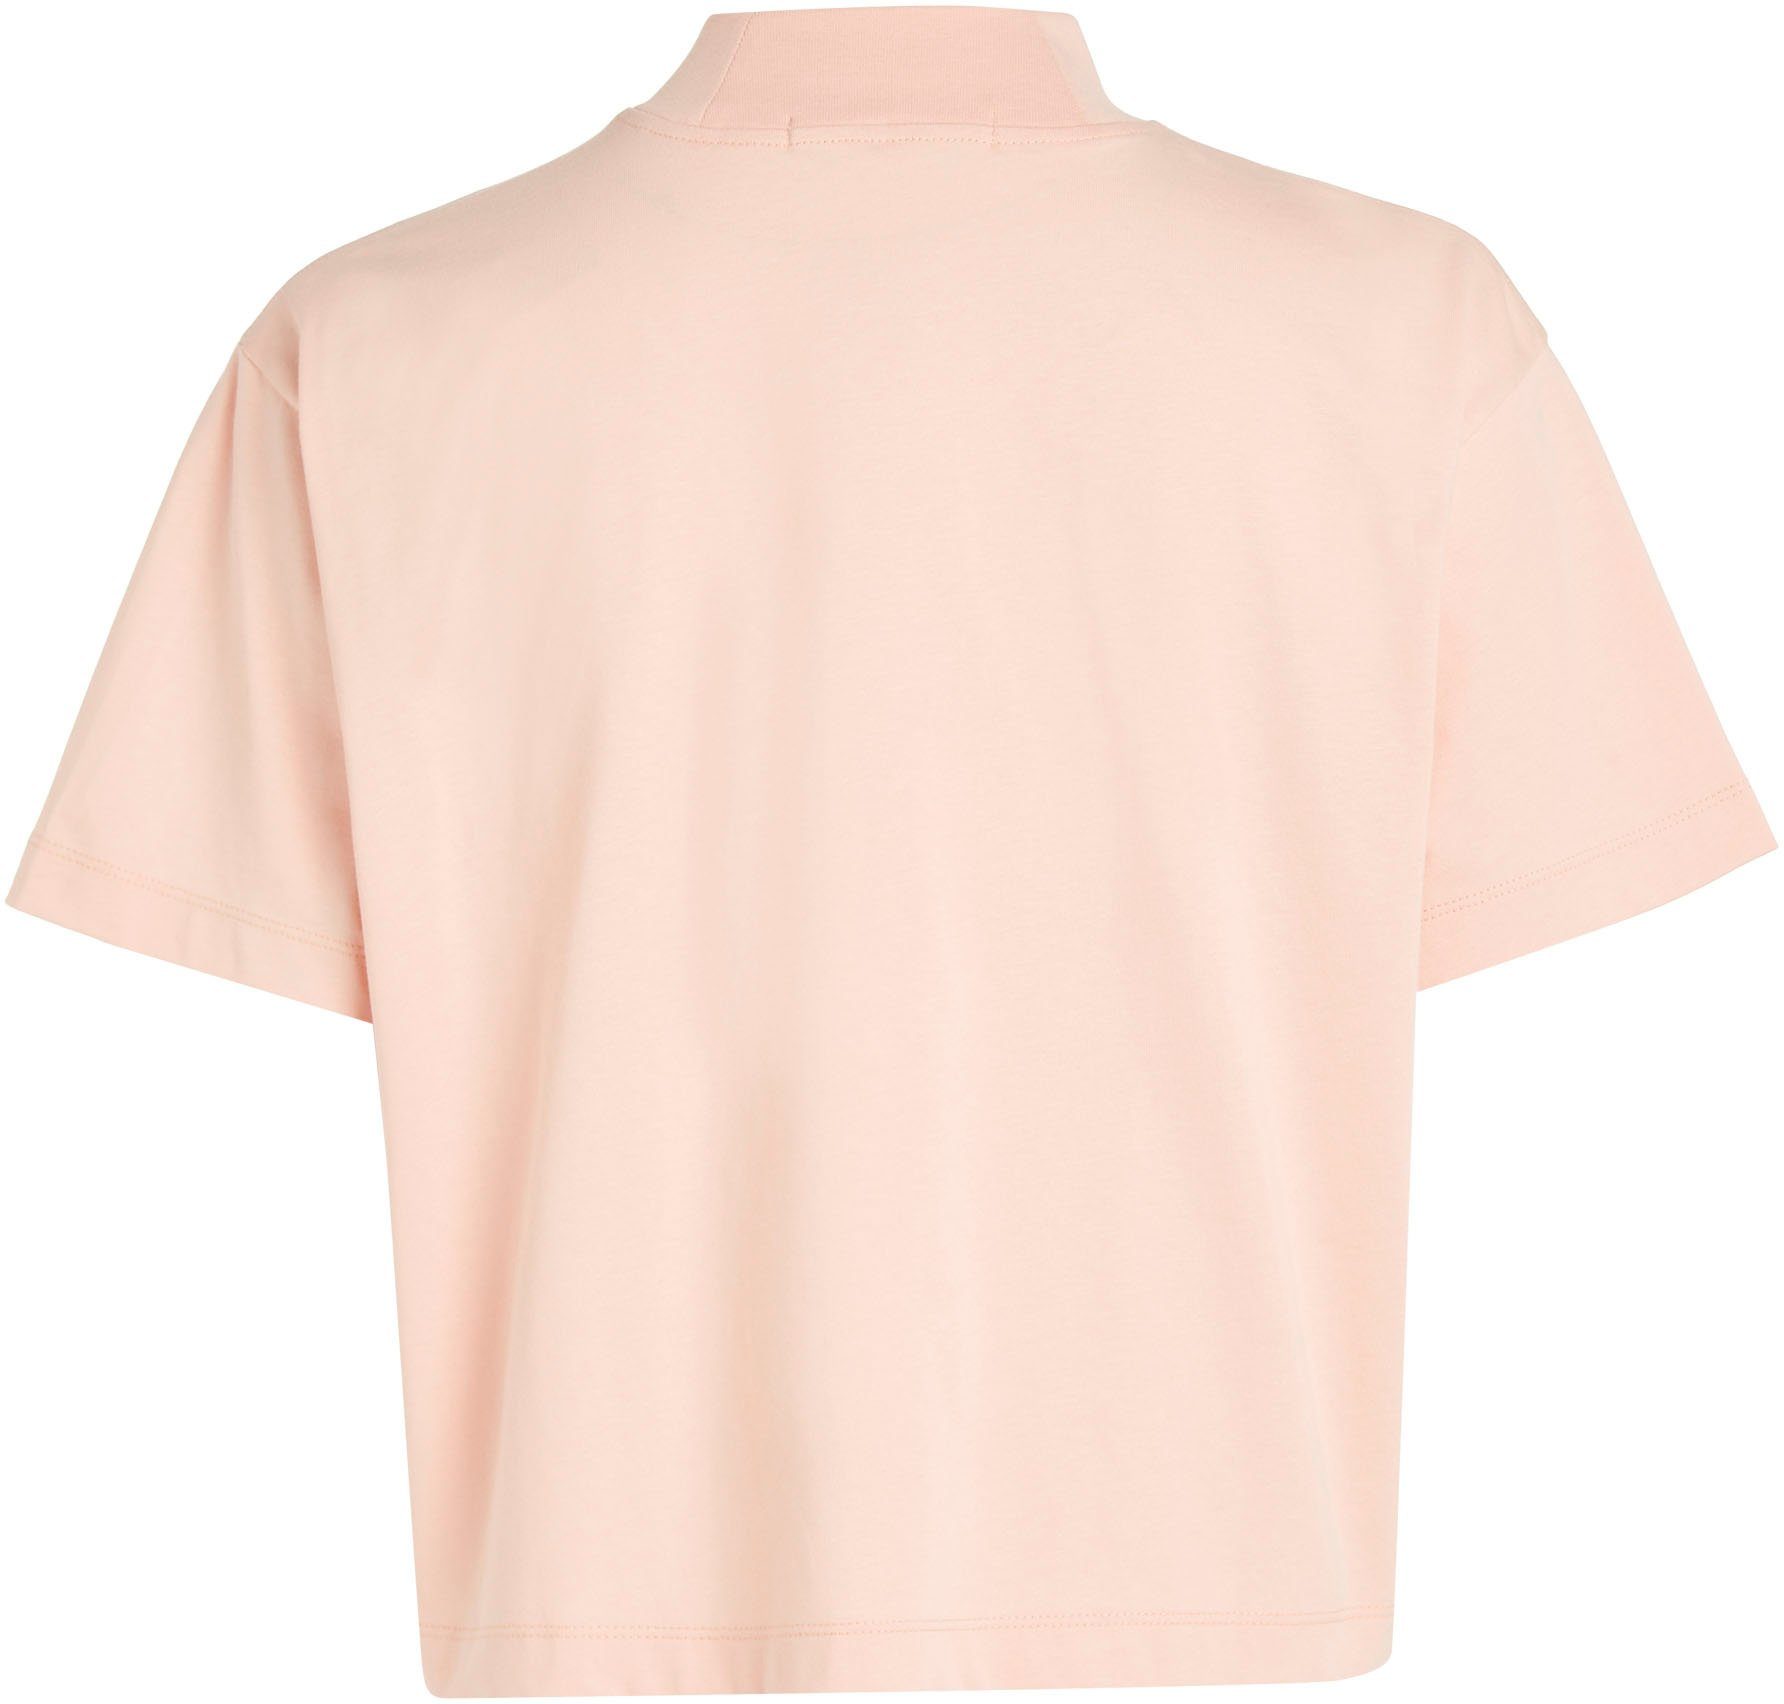 Calvin Klein Jeans T-Shirt Blossom ARCHIVAL Faint MONOLOGO TEE